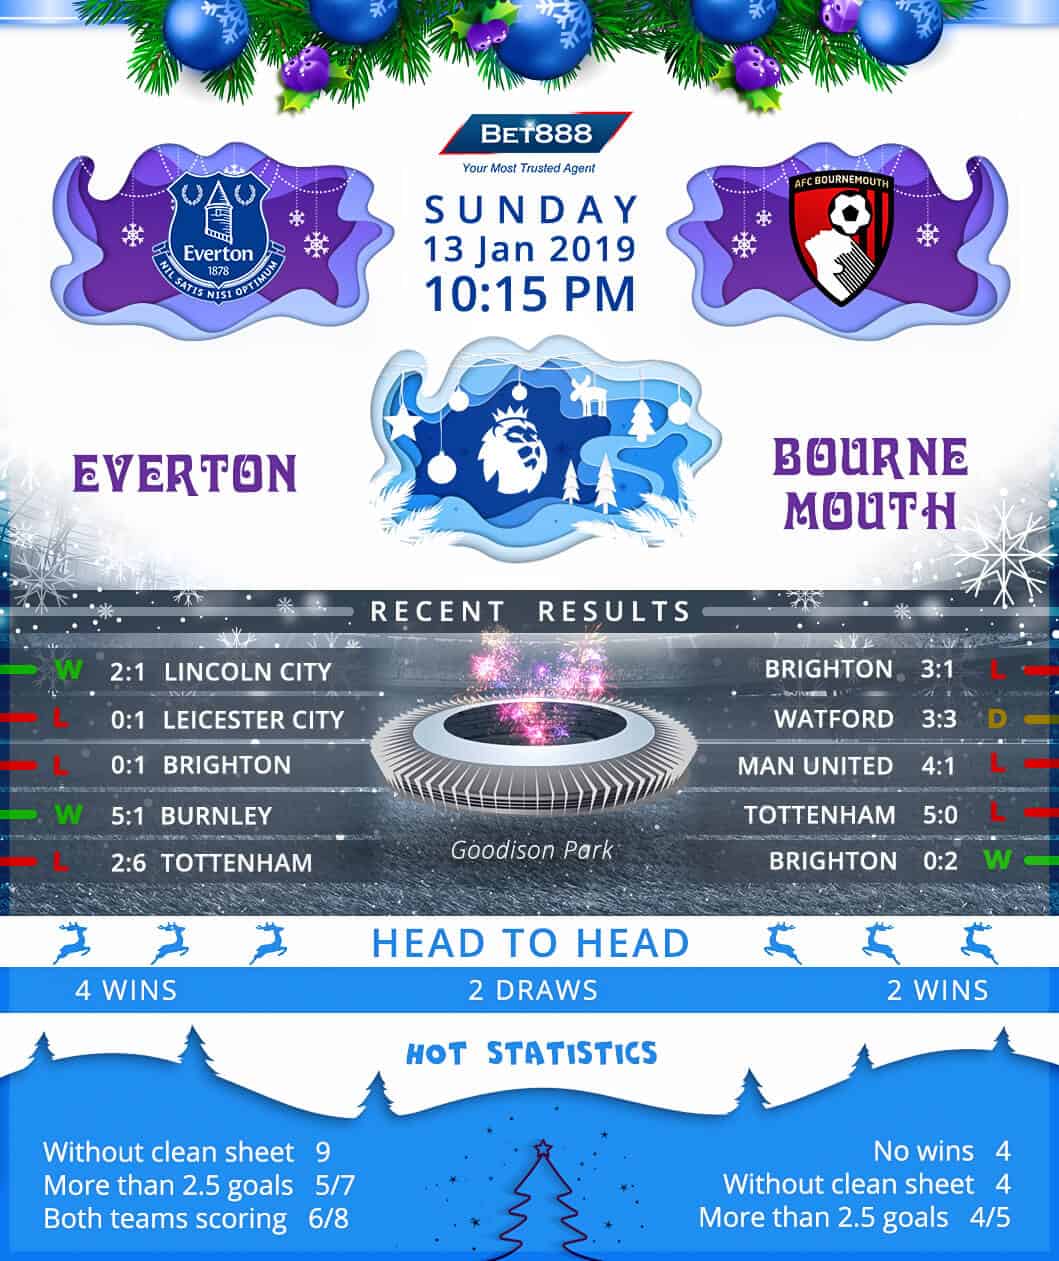 Everton vs Bournemouth 13/01/19